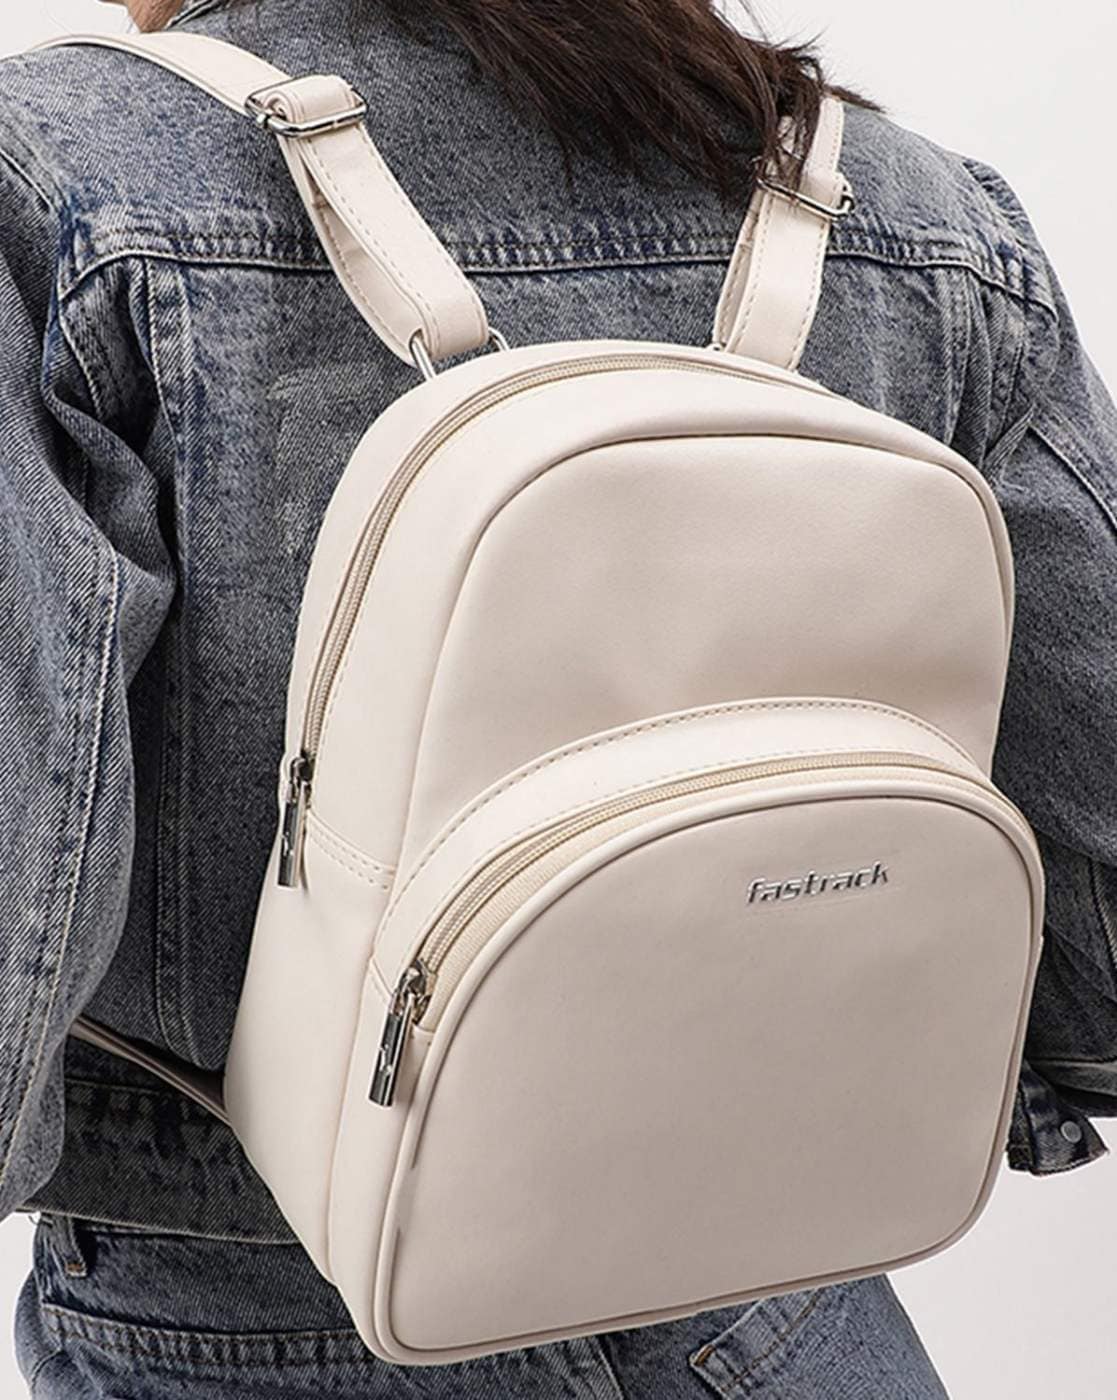 I IHAYNER Girls Fashion Backpack Mini Backpack Purse for Teen India | Ubuy